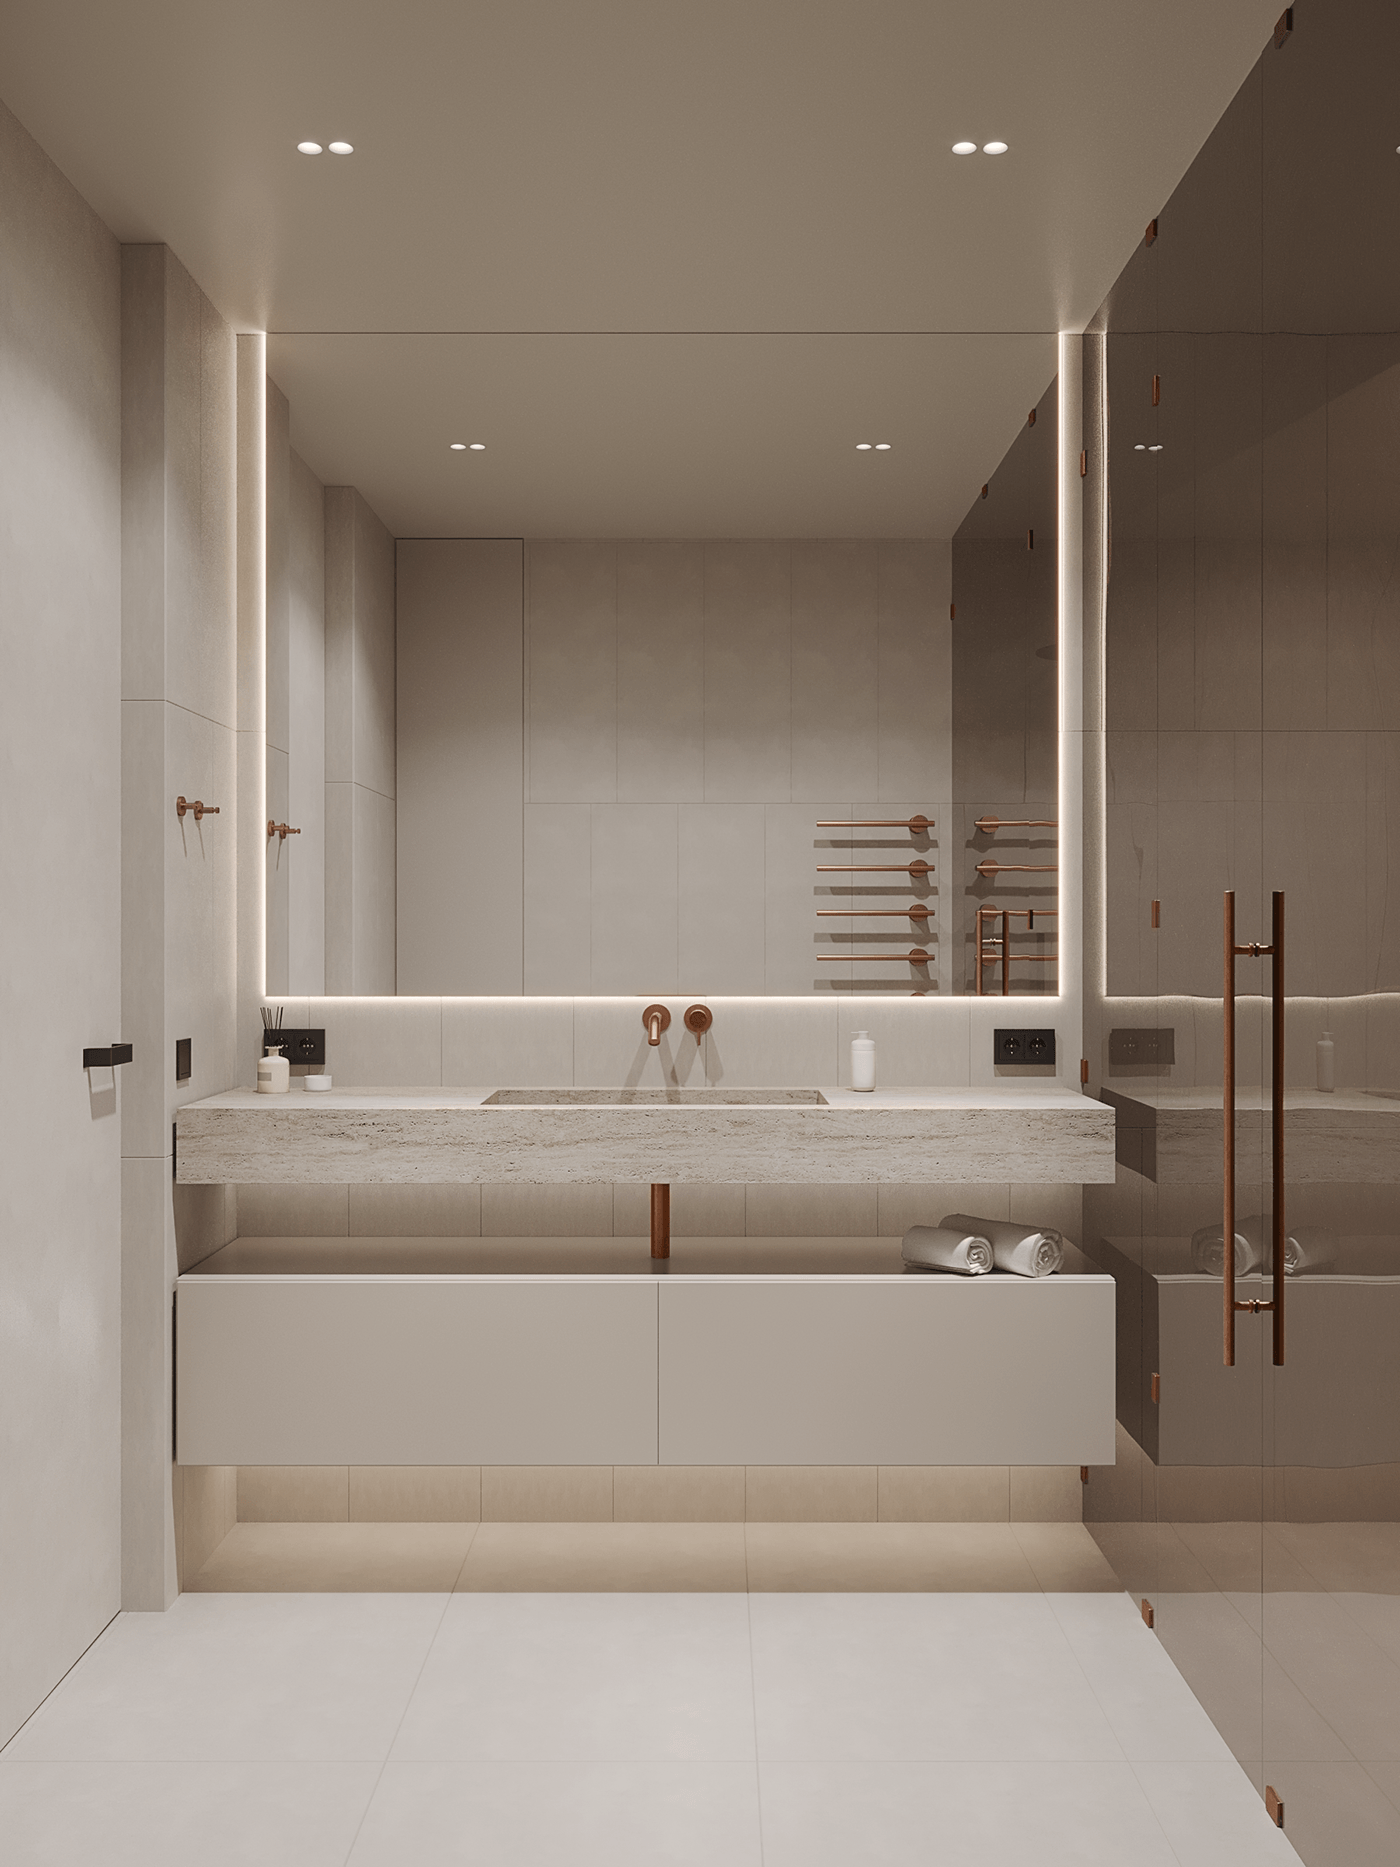 3D 3ds max visualization interior design  design designer architecture Render minimal bedroom